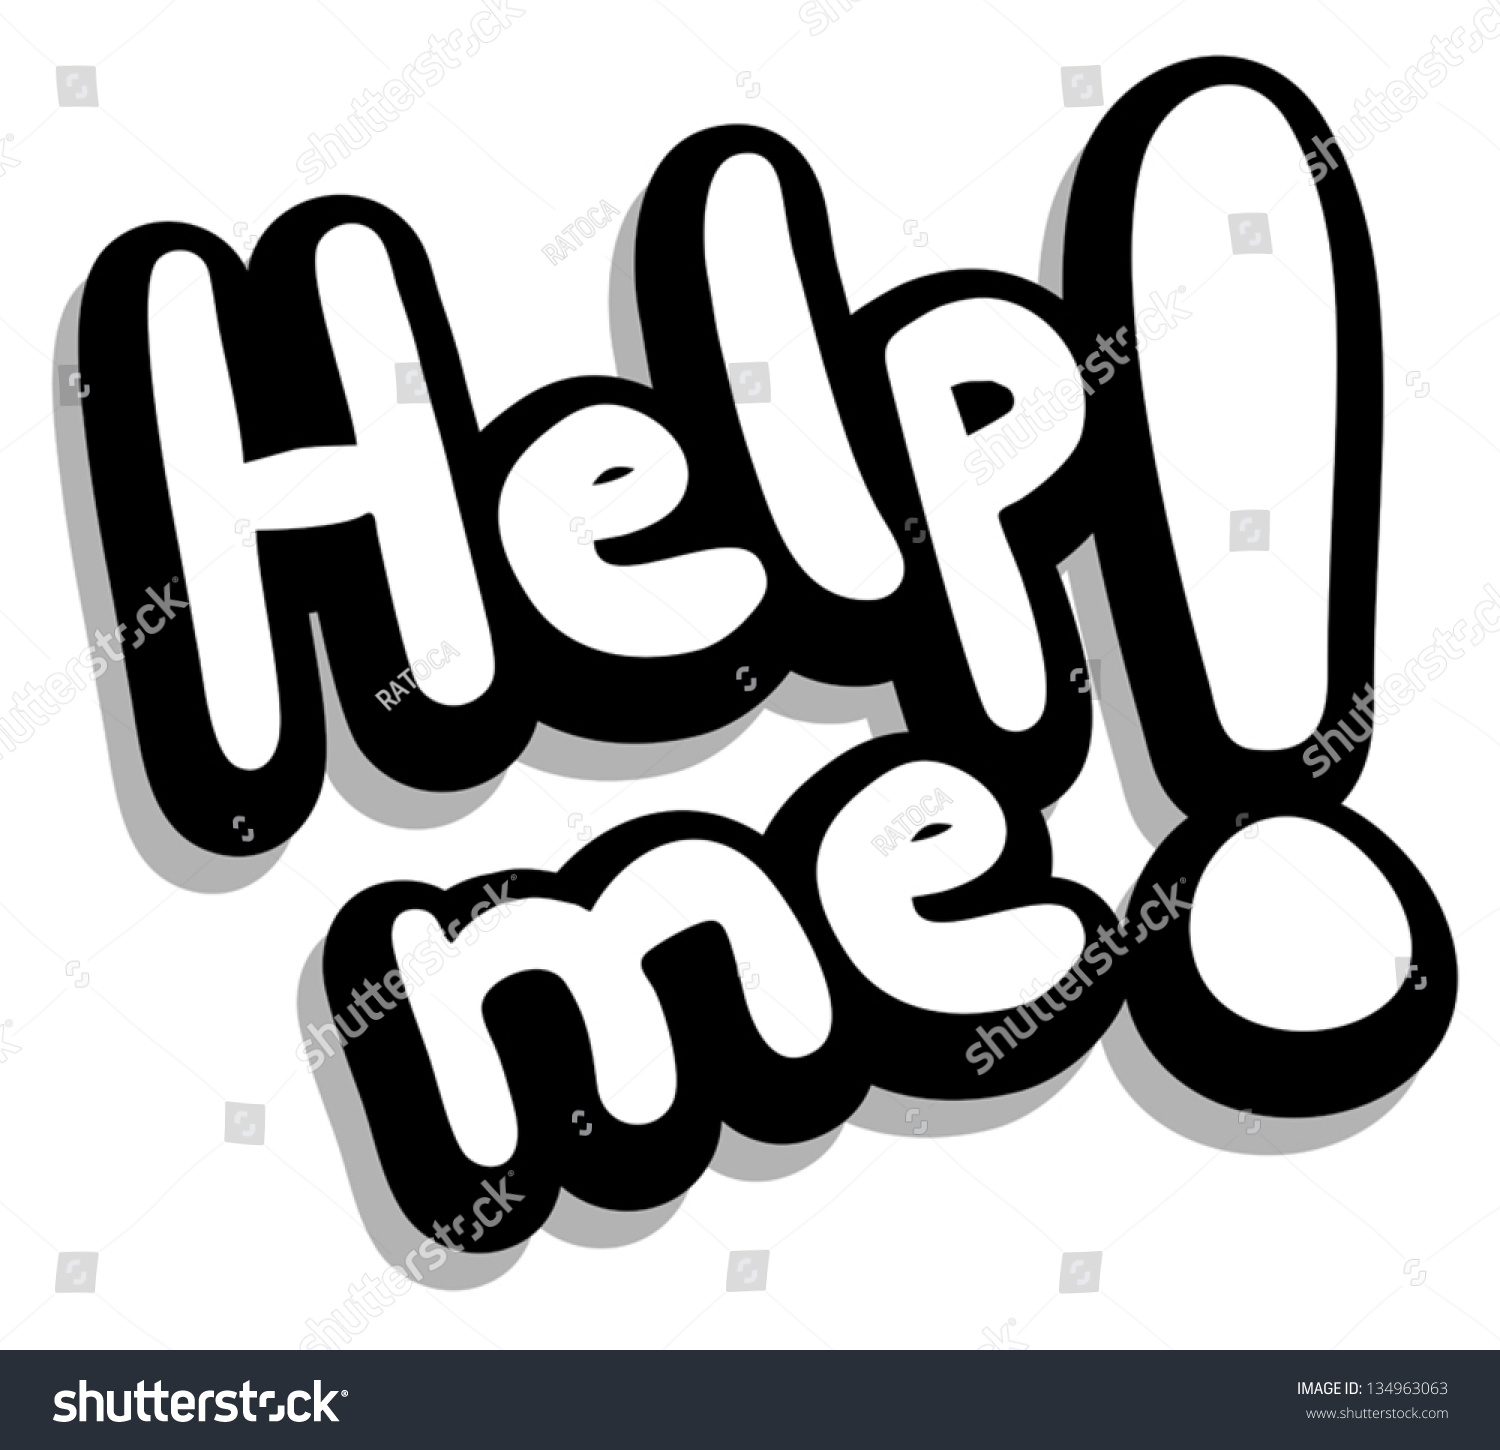 Help Me เวกเตอร์สต็อก 134963063 - Shutterstock